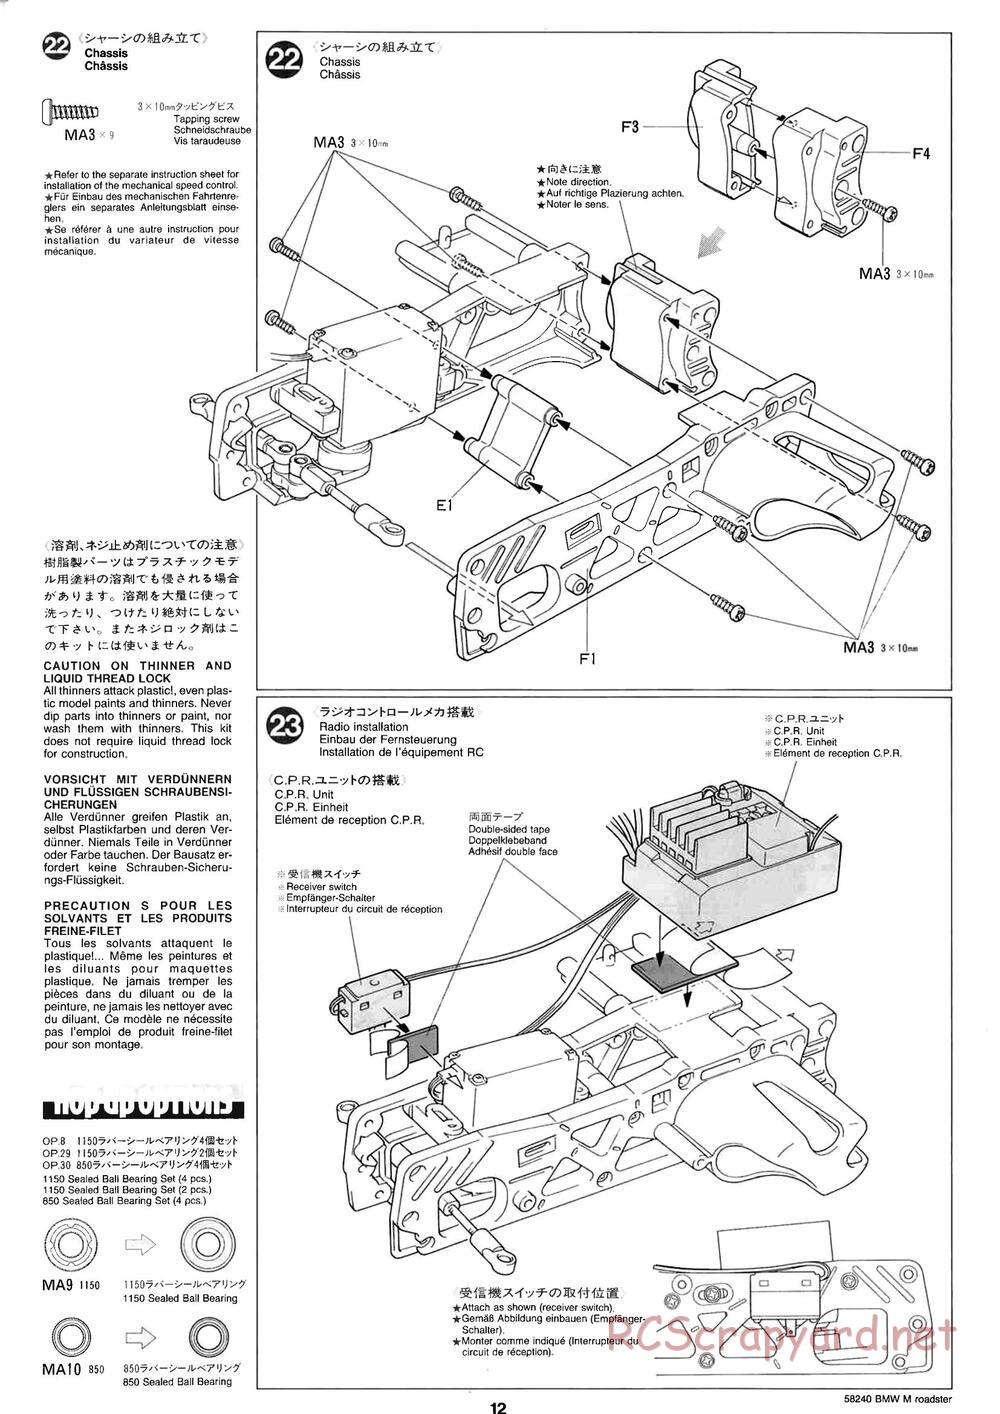 Tamiya - BMW M Roadster - M04L Chassis - Manual - Page 12